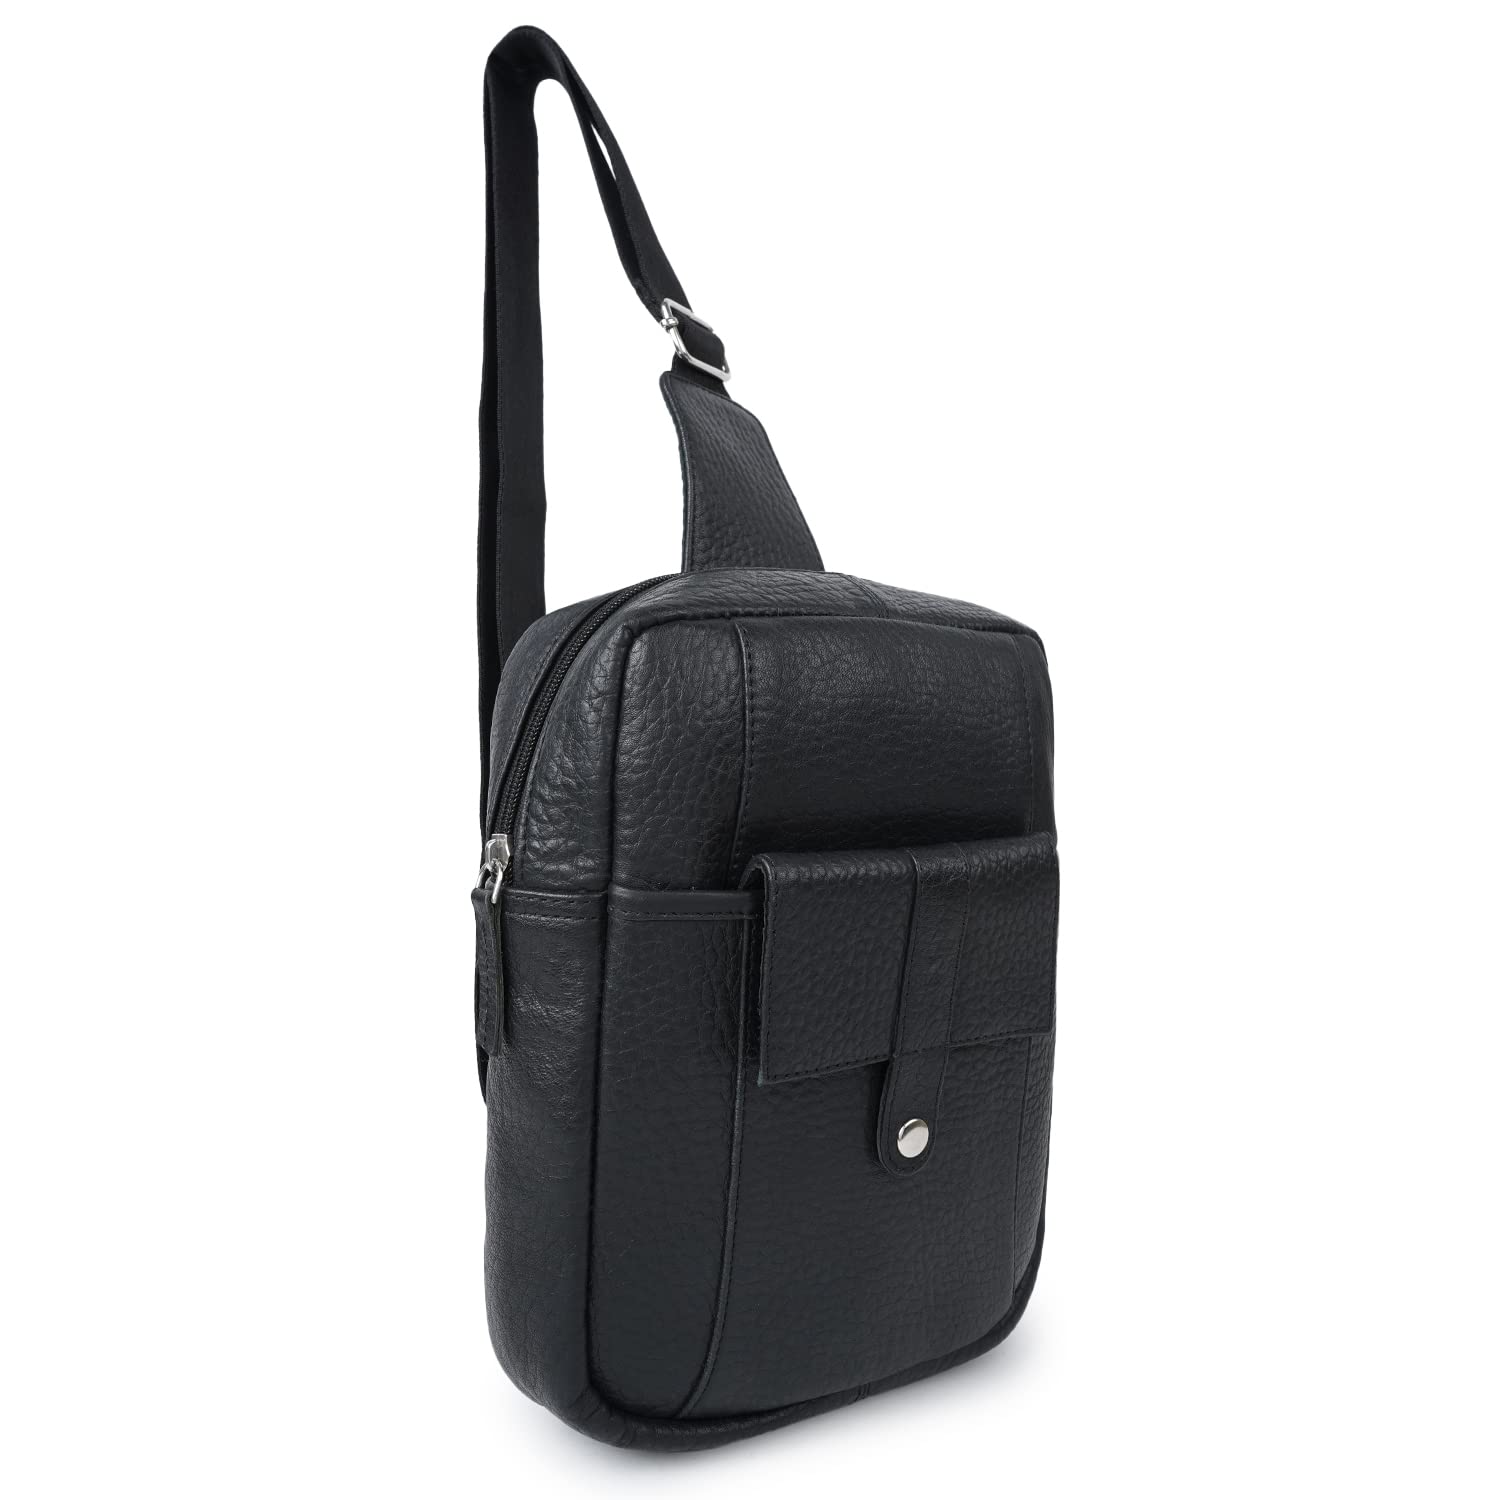 CIMONI® Premium Genuine Leather Sling Bag Stylish Unique Design Side Purse Daytrip Bag Short Trip Trendy Travel Crossbody Bag